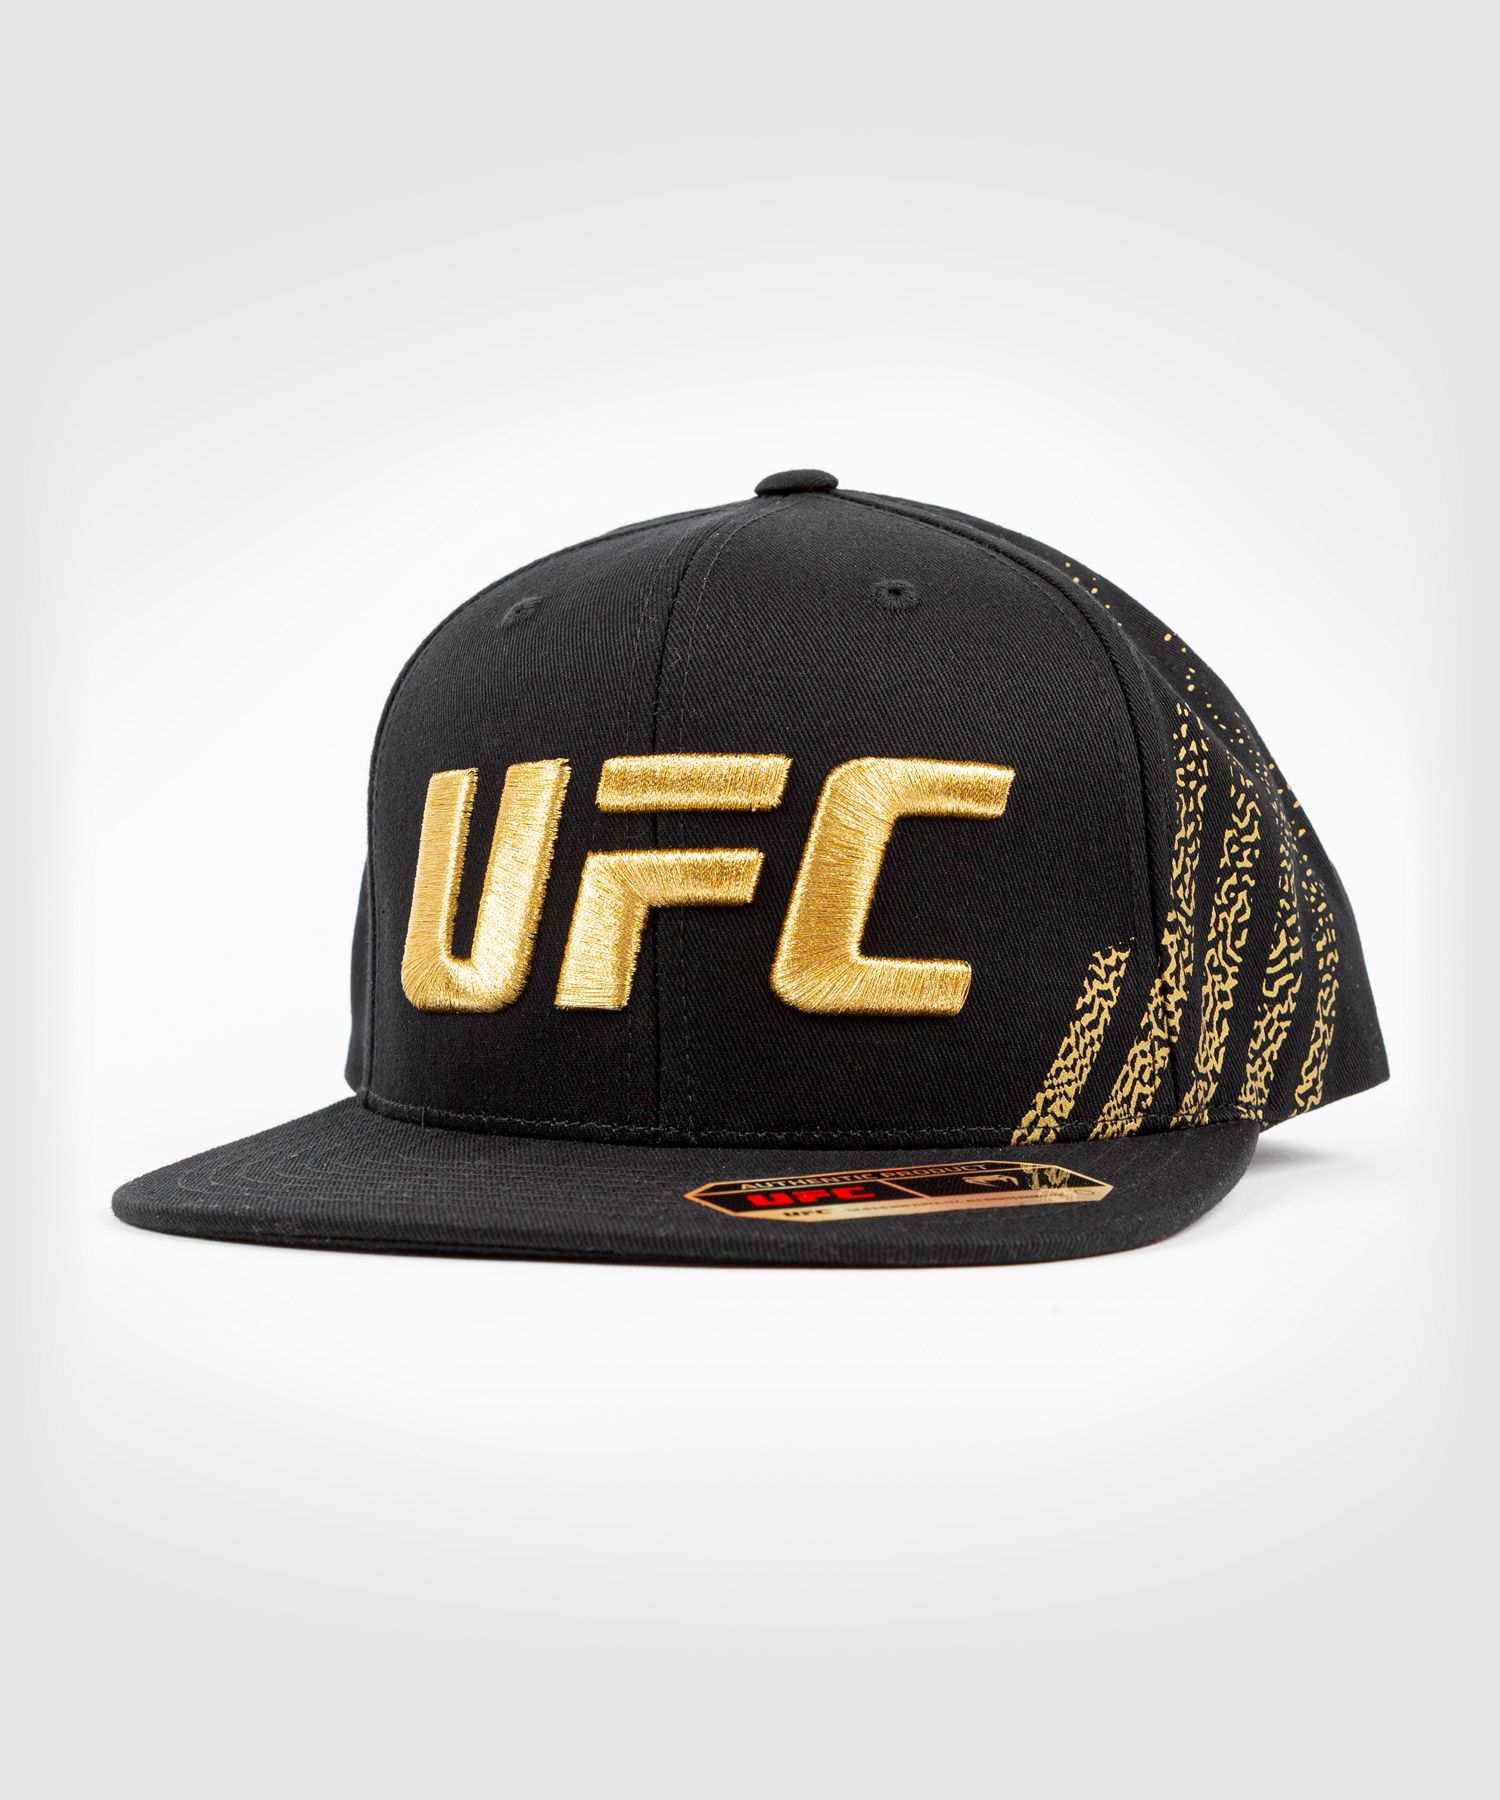 UFC Venum AUTHENTIC FIGHT NIGHT CHAMPION Snapback, Fekete/Arany